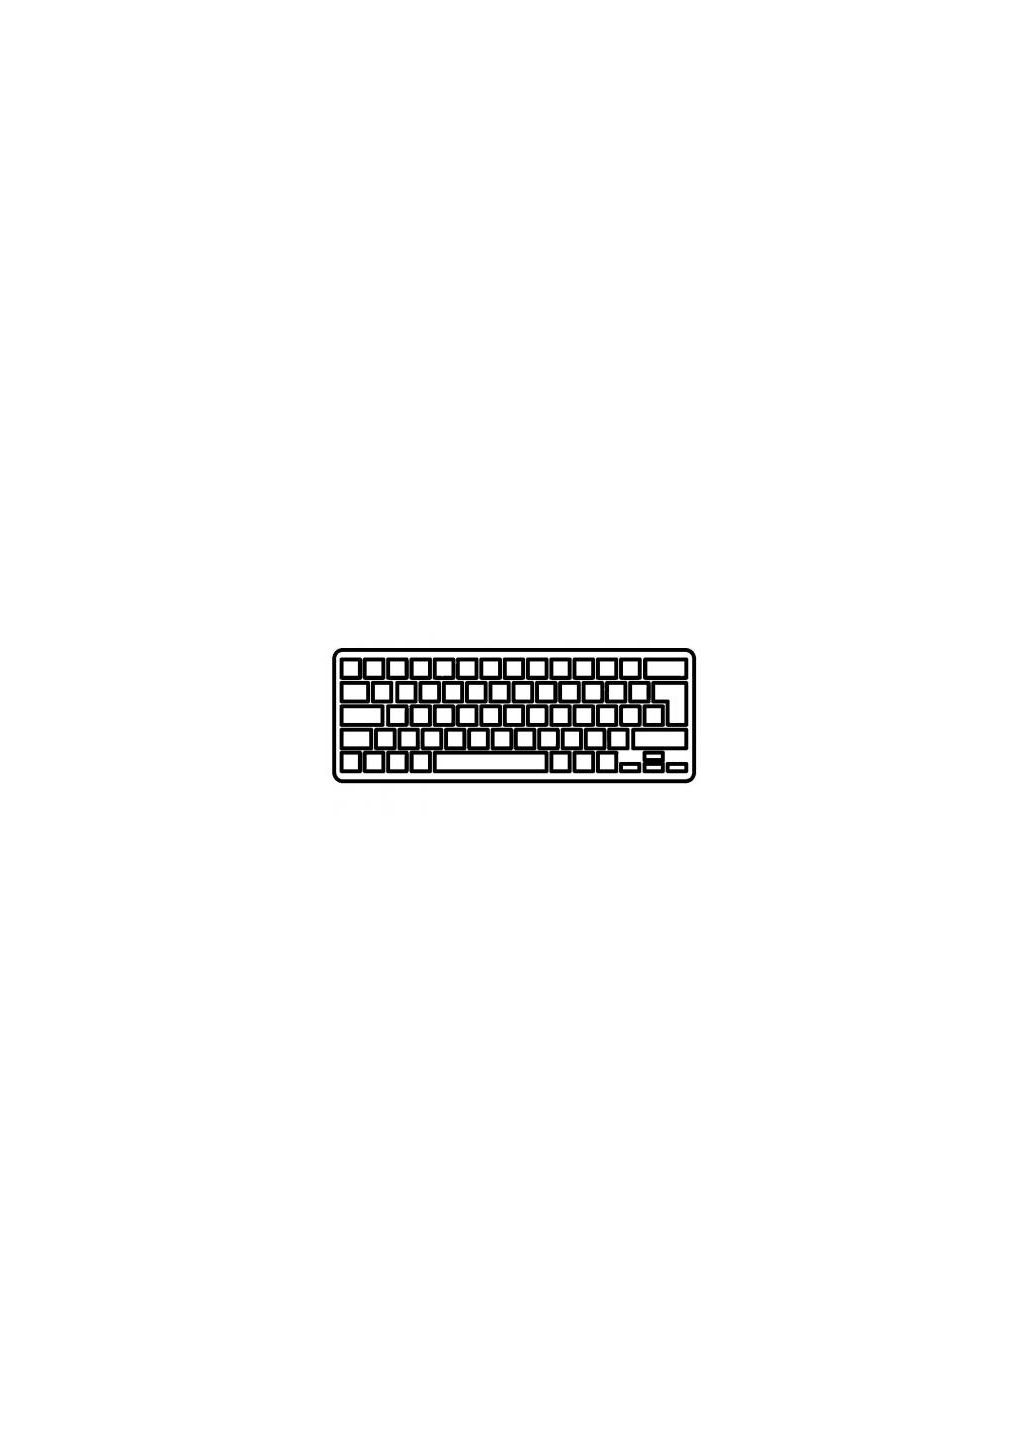 Клавиатура ноутбука (A43407) Lenovo ideapad g460 series черная ua (276707050)